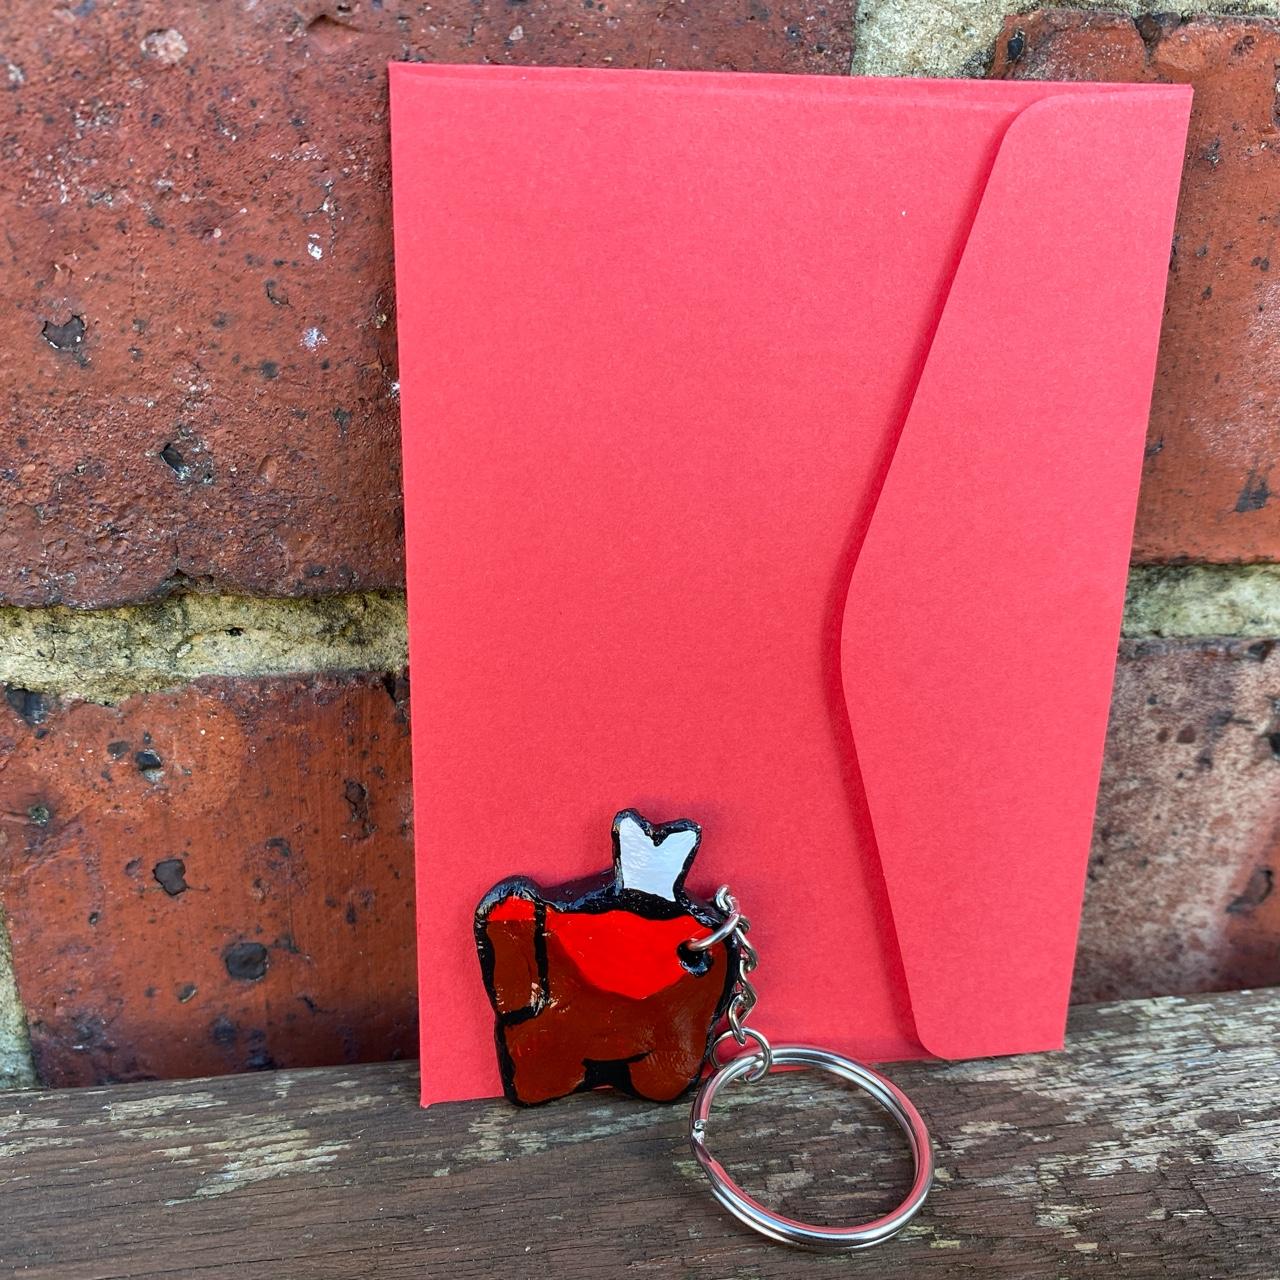 red uno reverse card earrings - Depop